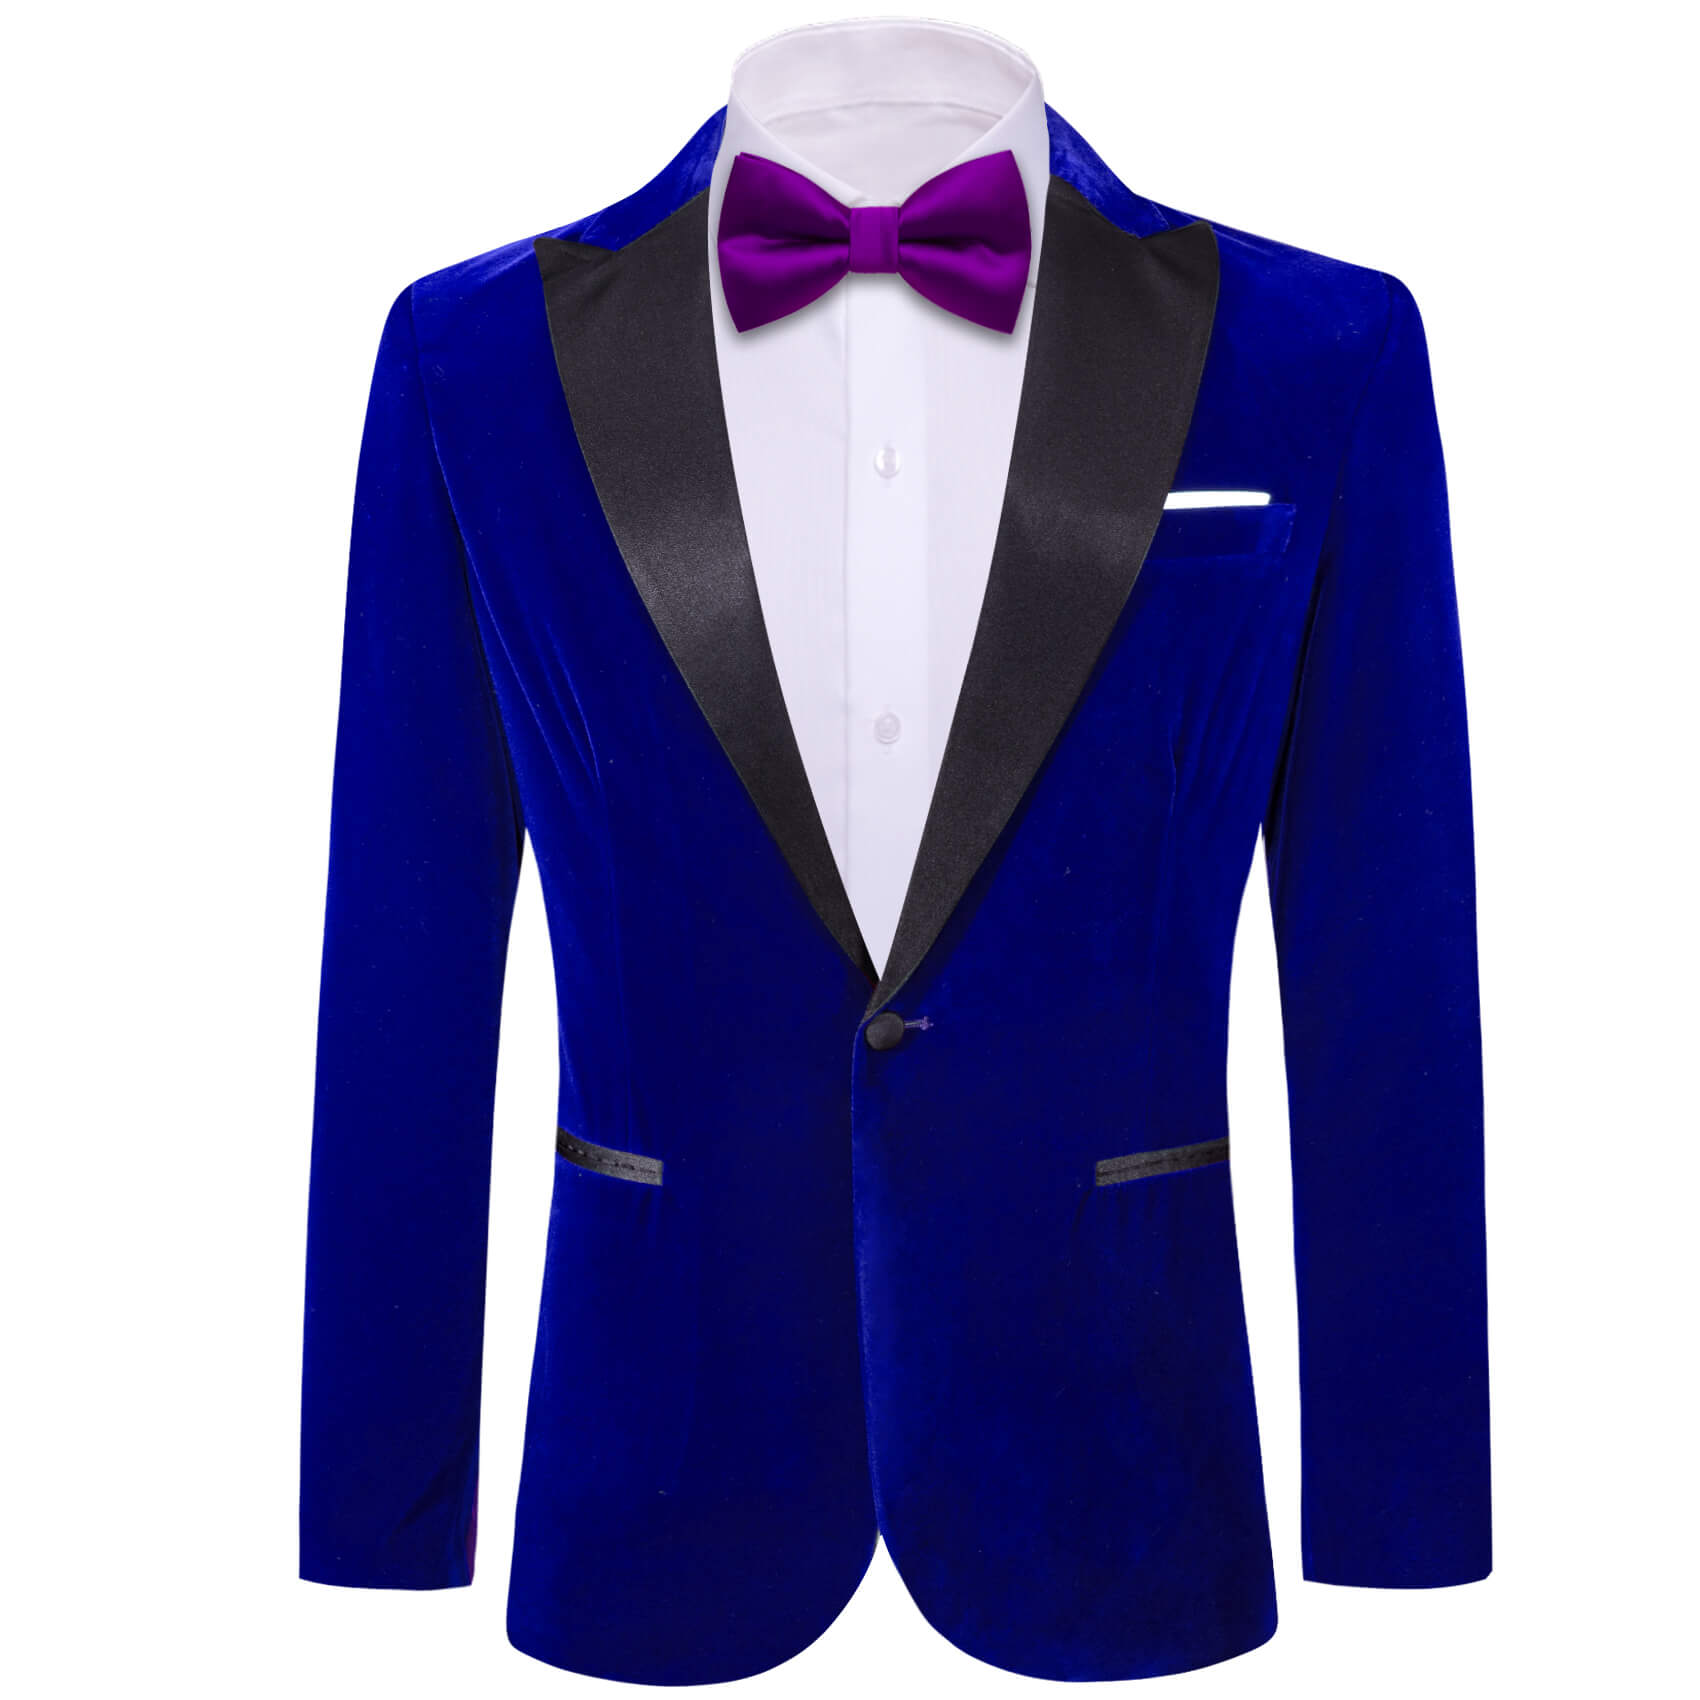 Barry.wang Men's Suit Navy Blue Solid Silk Peak Collar Suit for Party